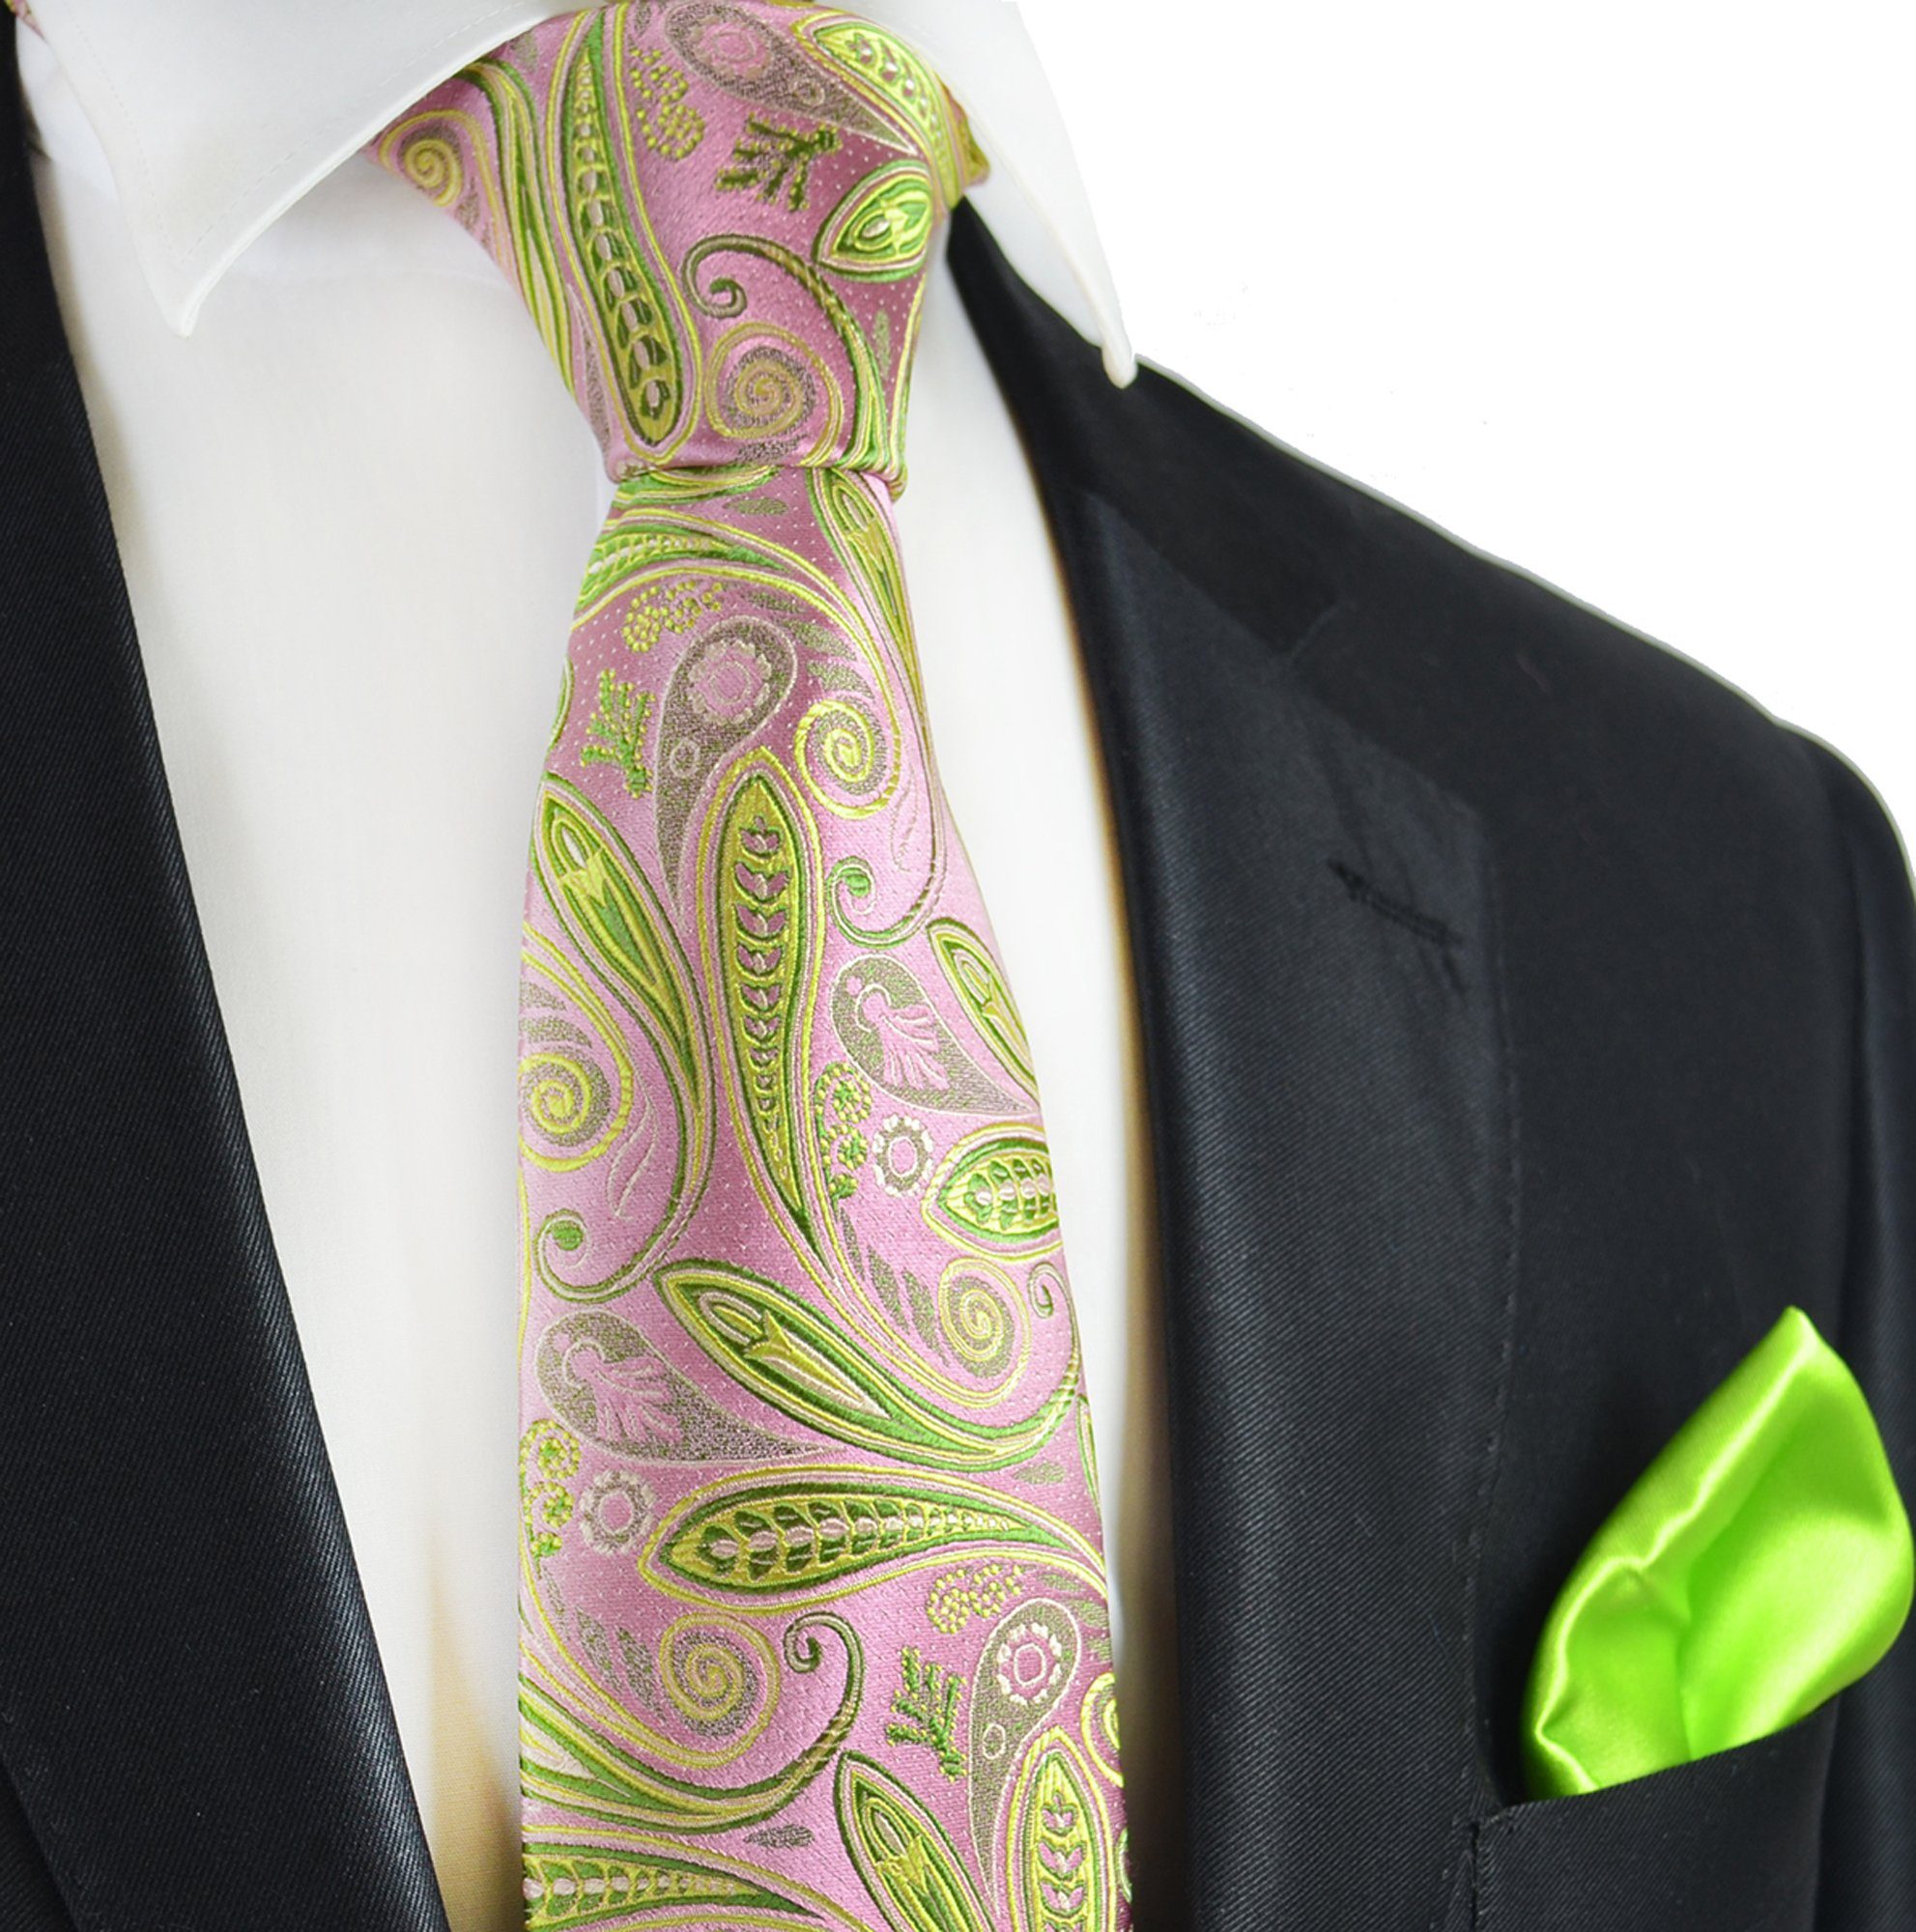 Paul Malone Krawatte 7-Fold Seidenkrawatte Schlips modern elegant 100% Seide paisley (Set, 2-St., mit Einstecktuch) rosa hellgrün grün S14113-30 rosa grün